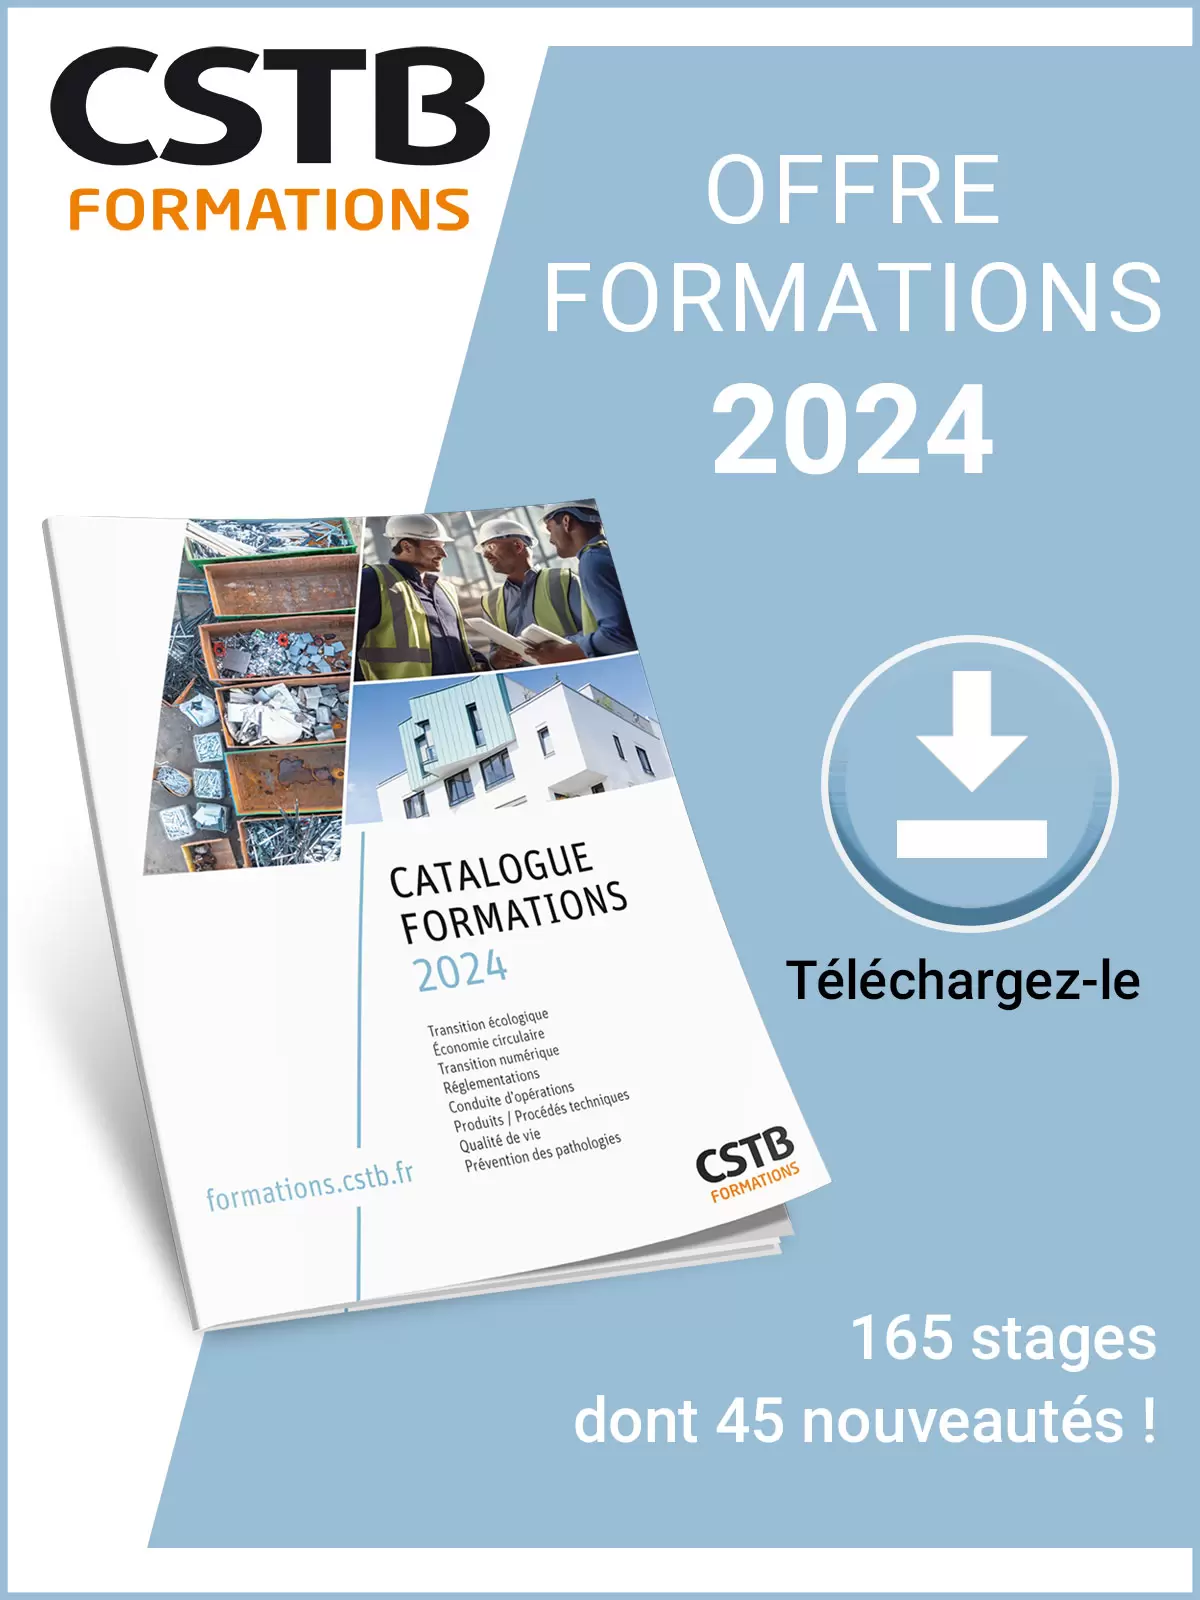 Catalogue formations 2024 - CSTB